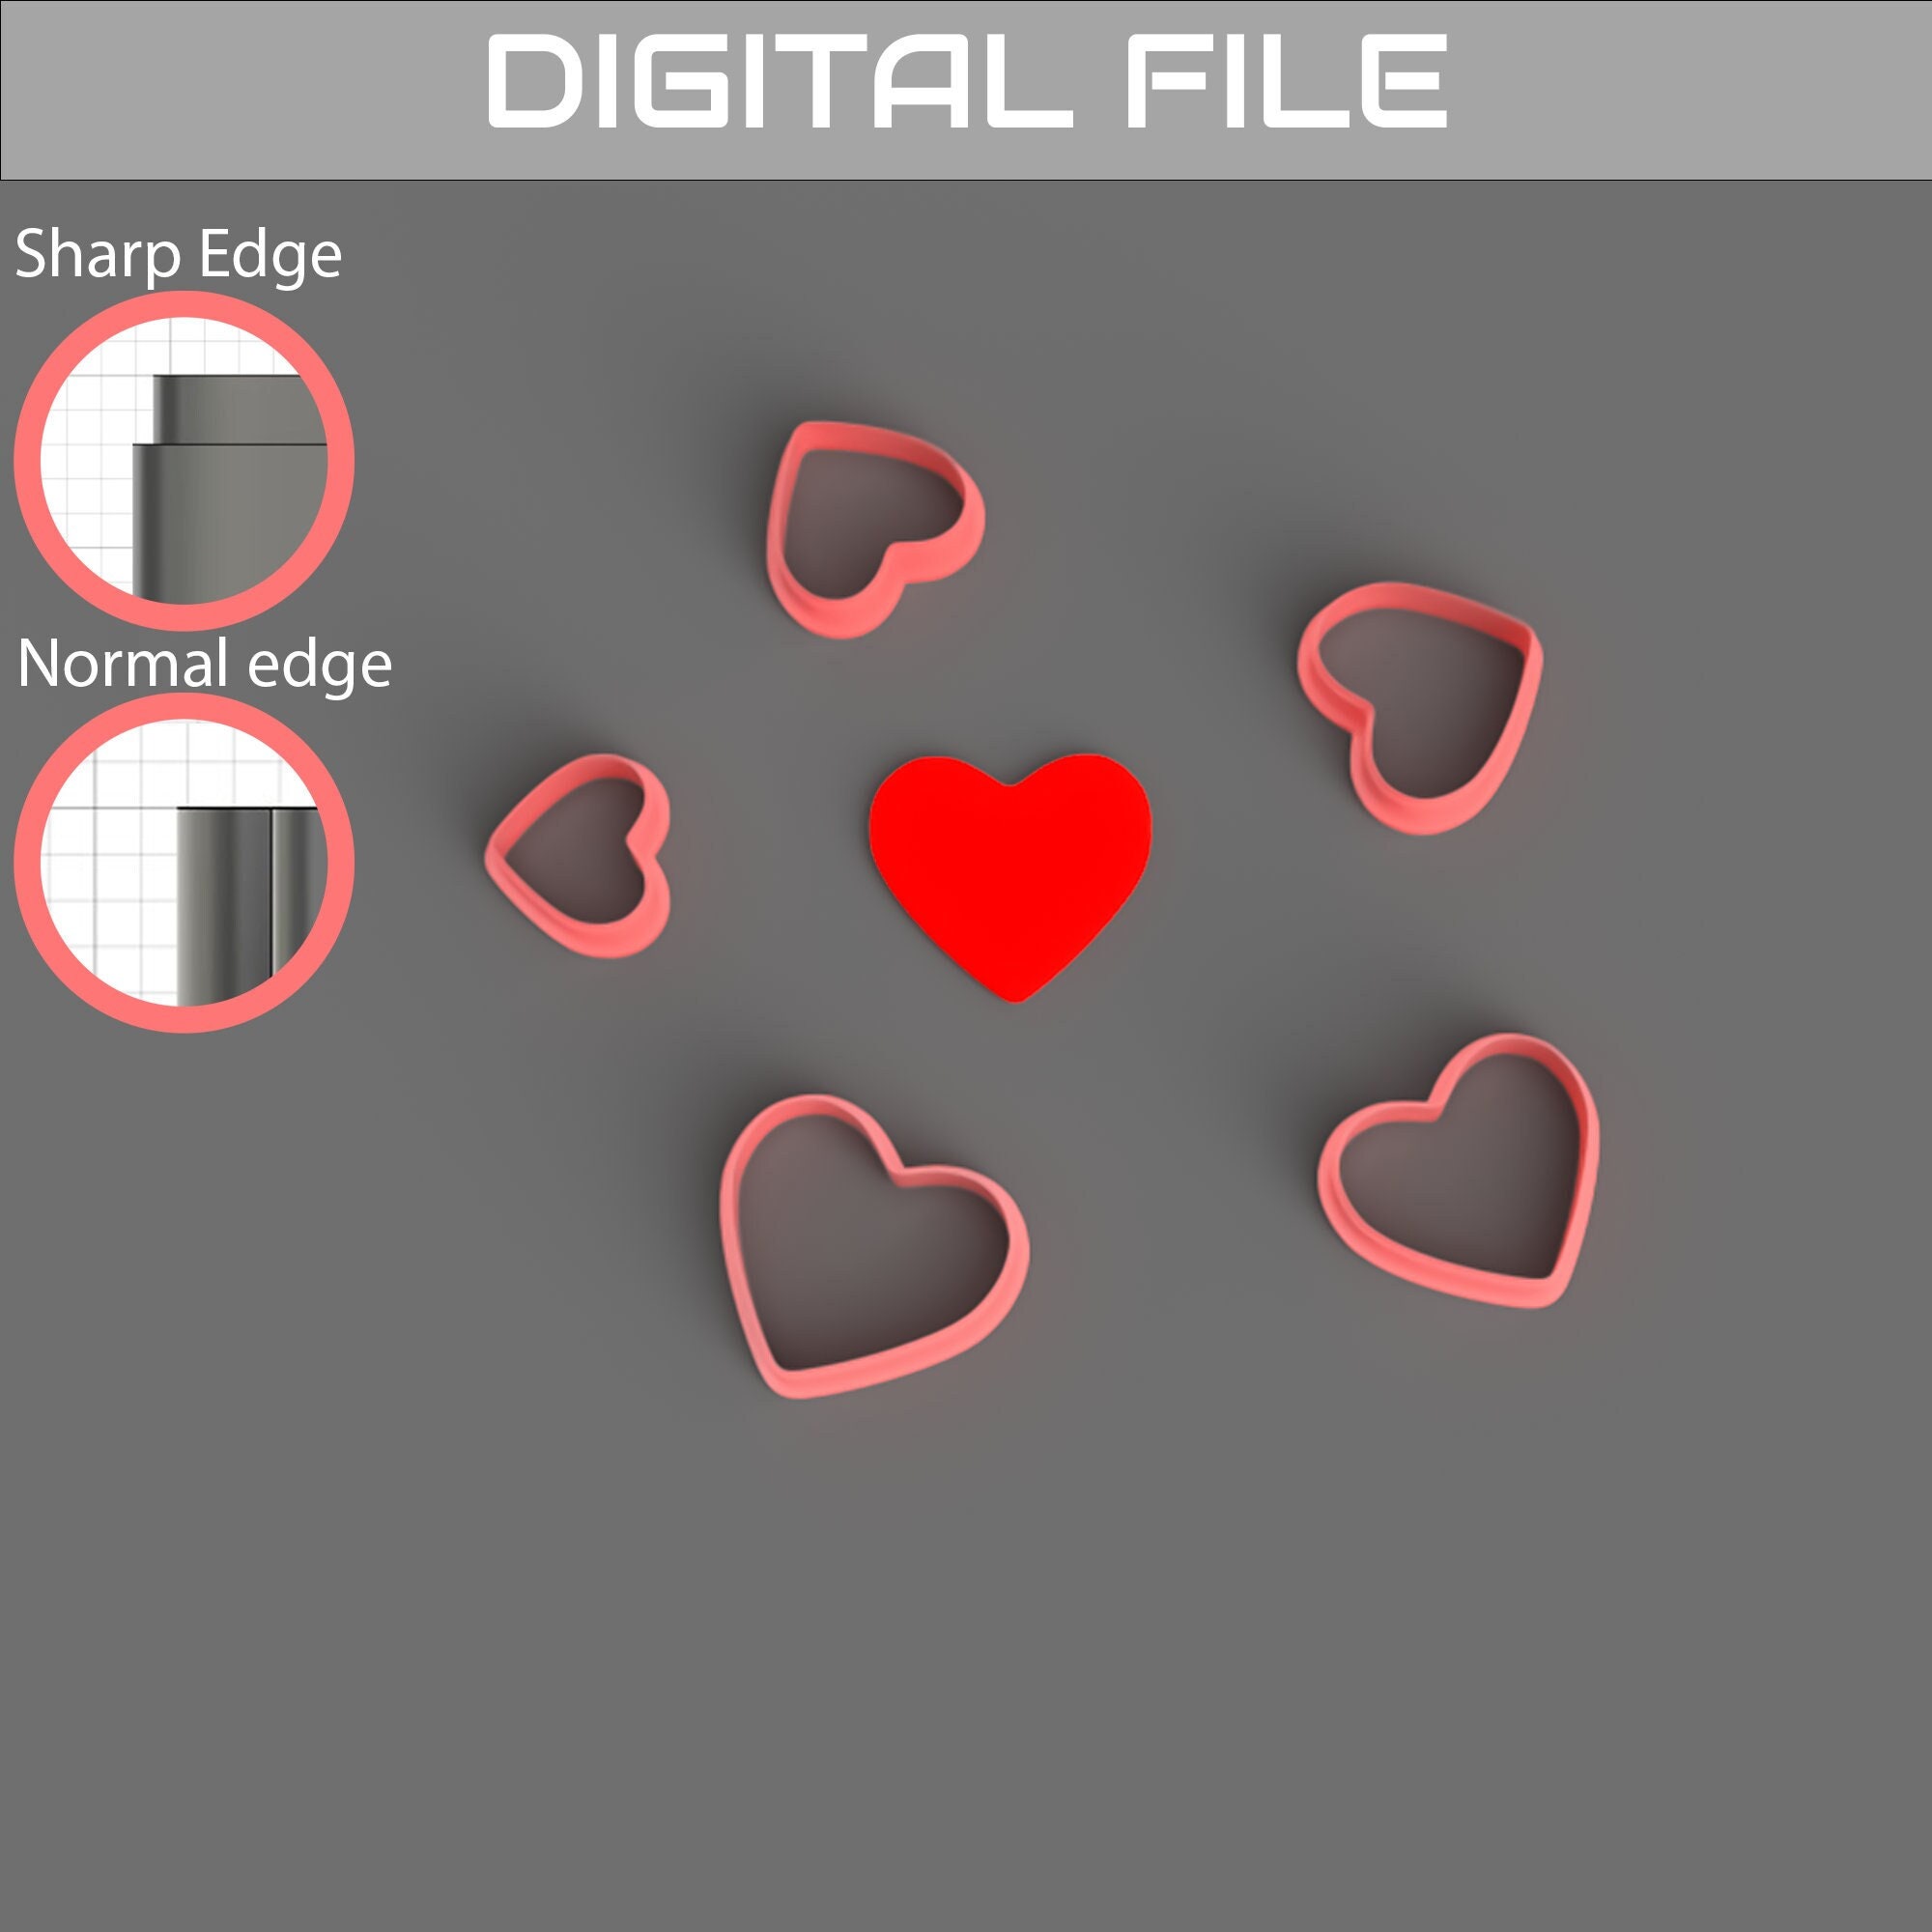 STL file HEART BOTTLE CLAY CUTTER SET 💜・3D print design to